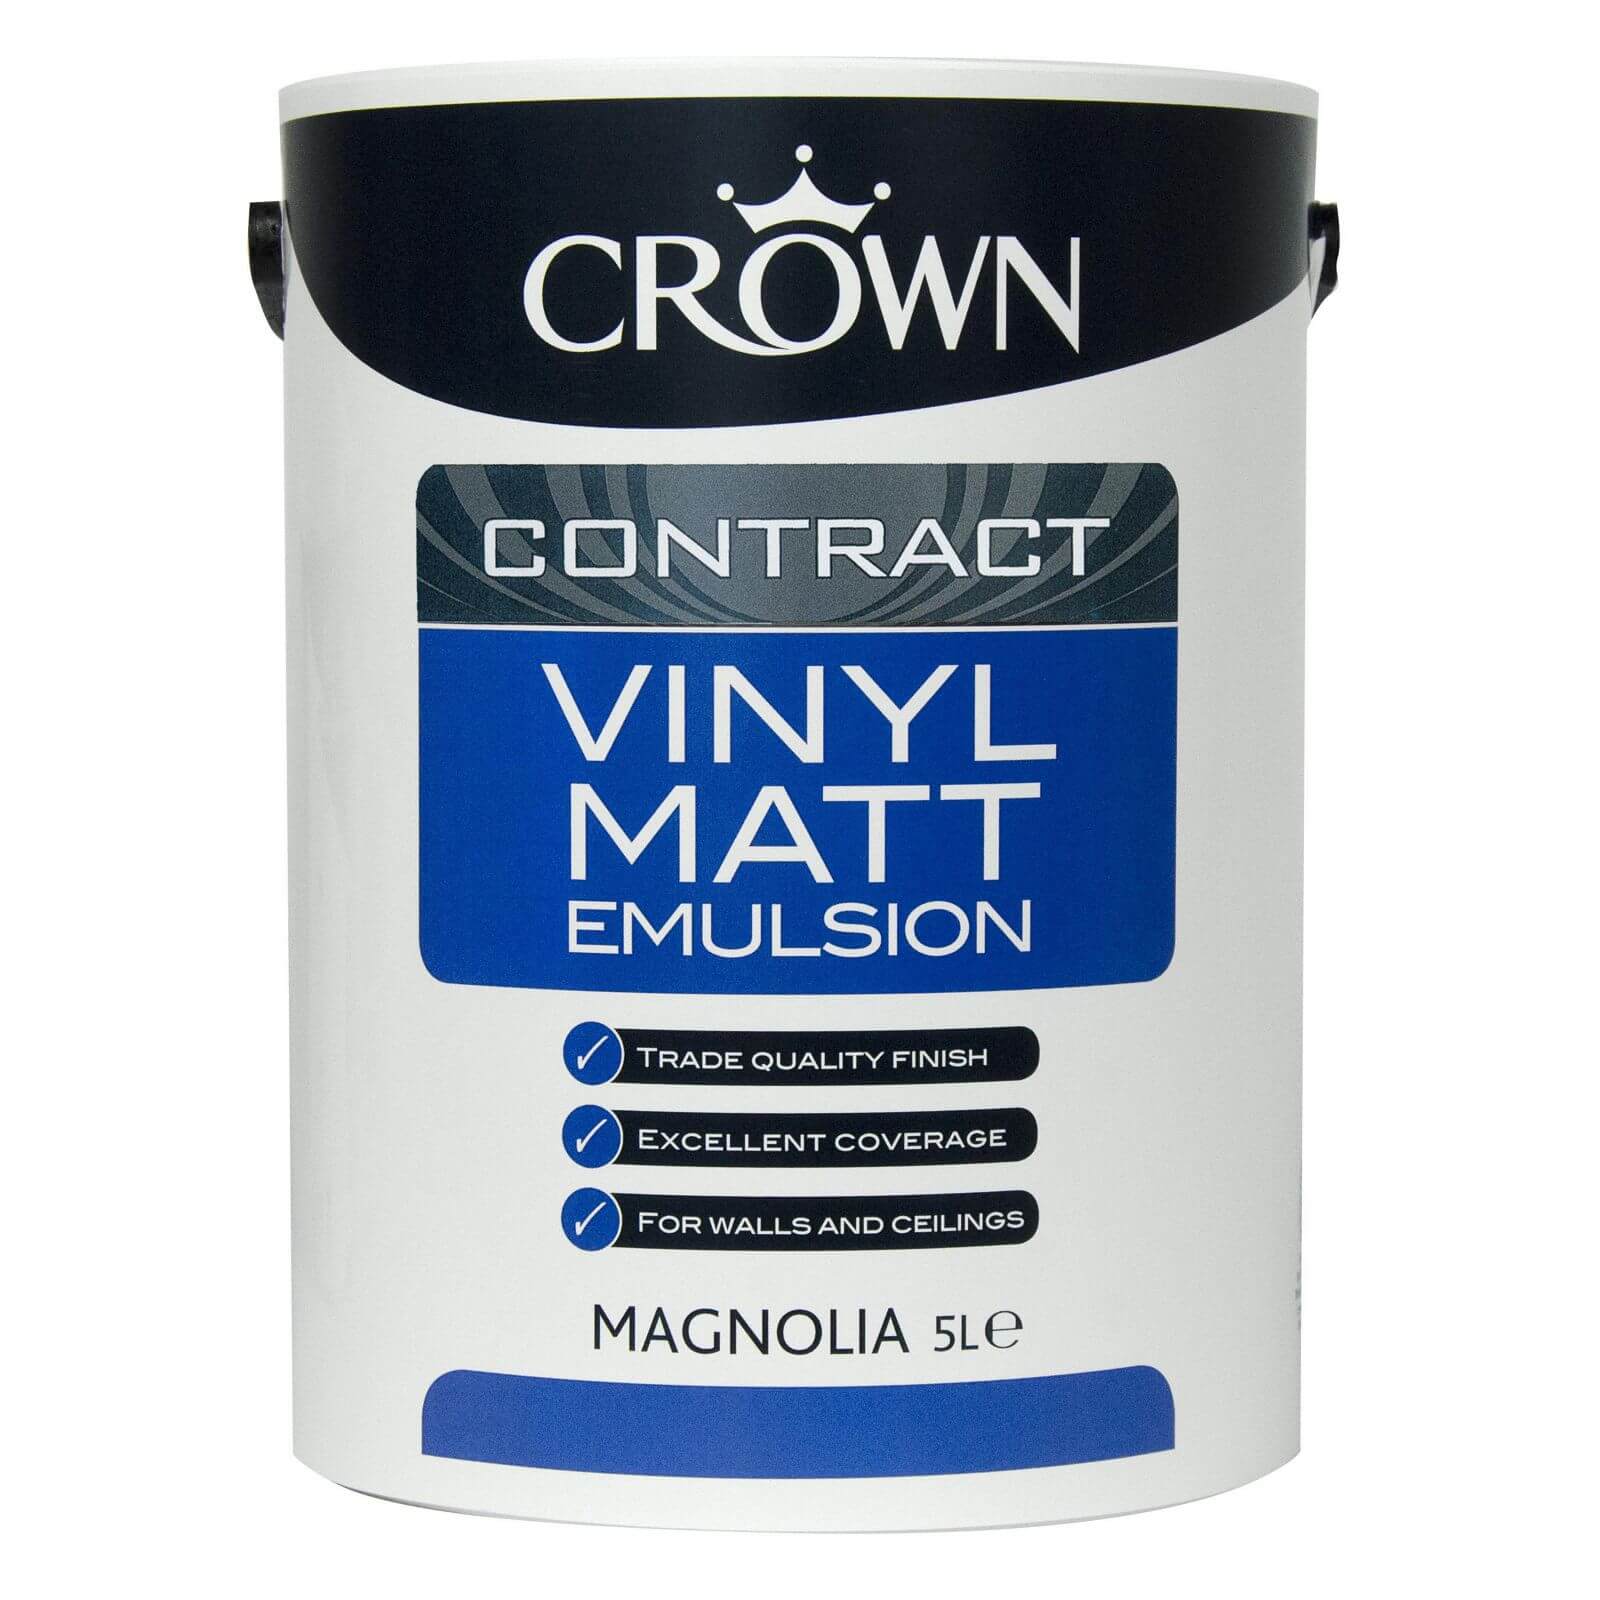 Photo of Crown Brilliant White Contract Paint - Vinyl Matt - 5l